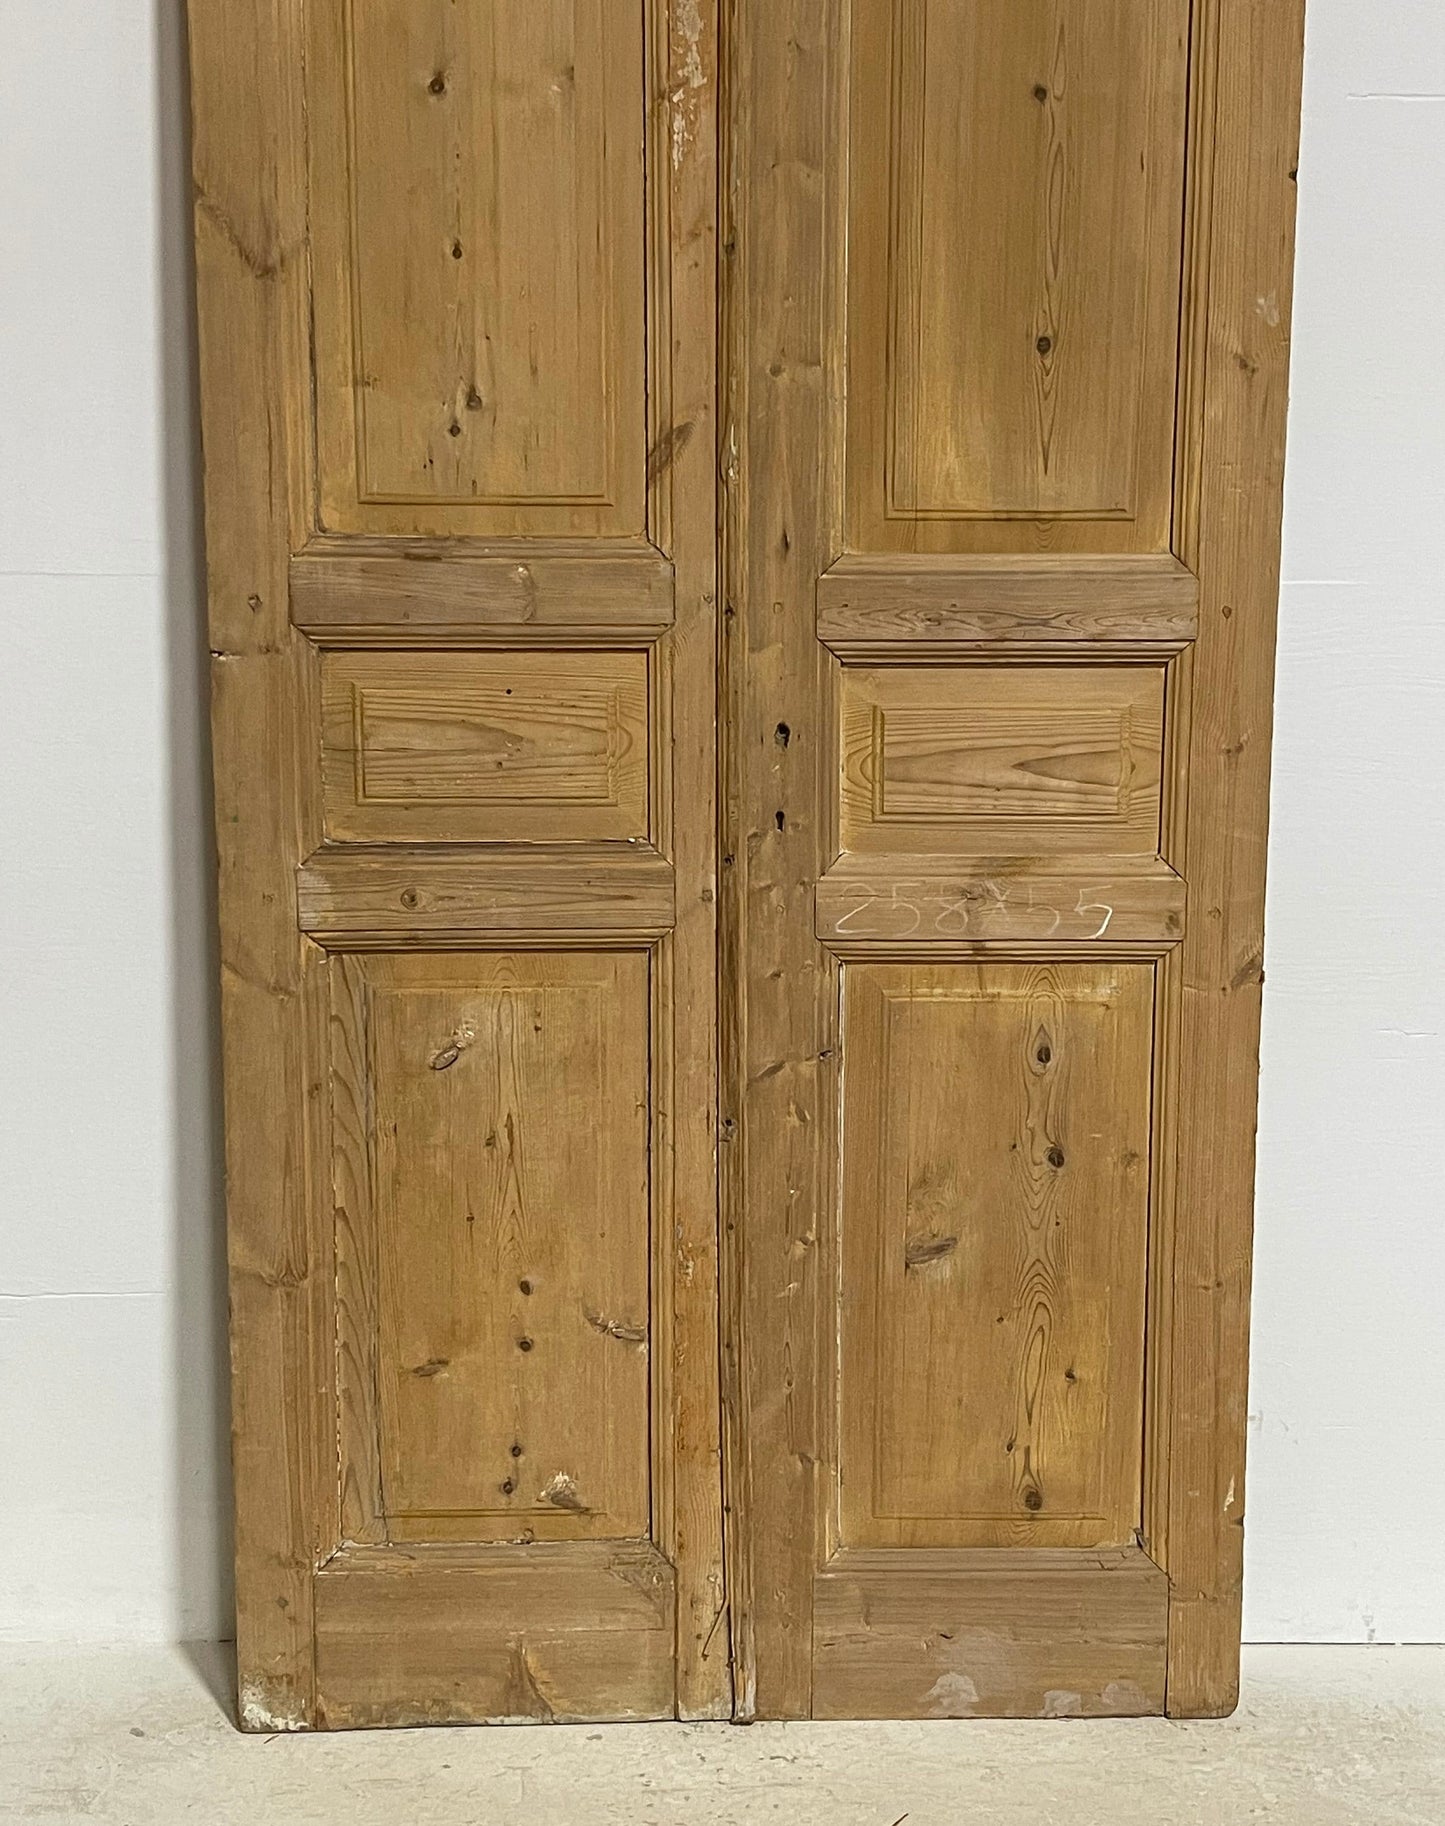 Antique French panel doors (101.5x42.75) G0182s